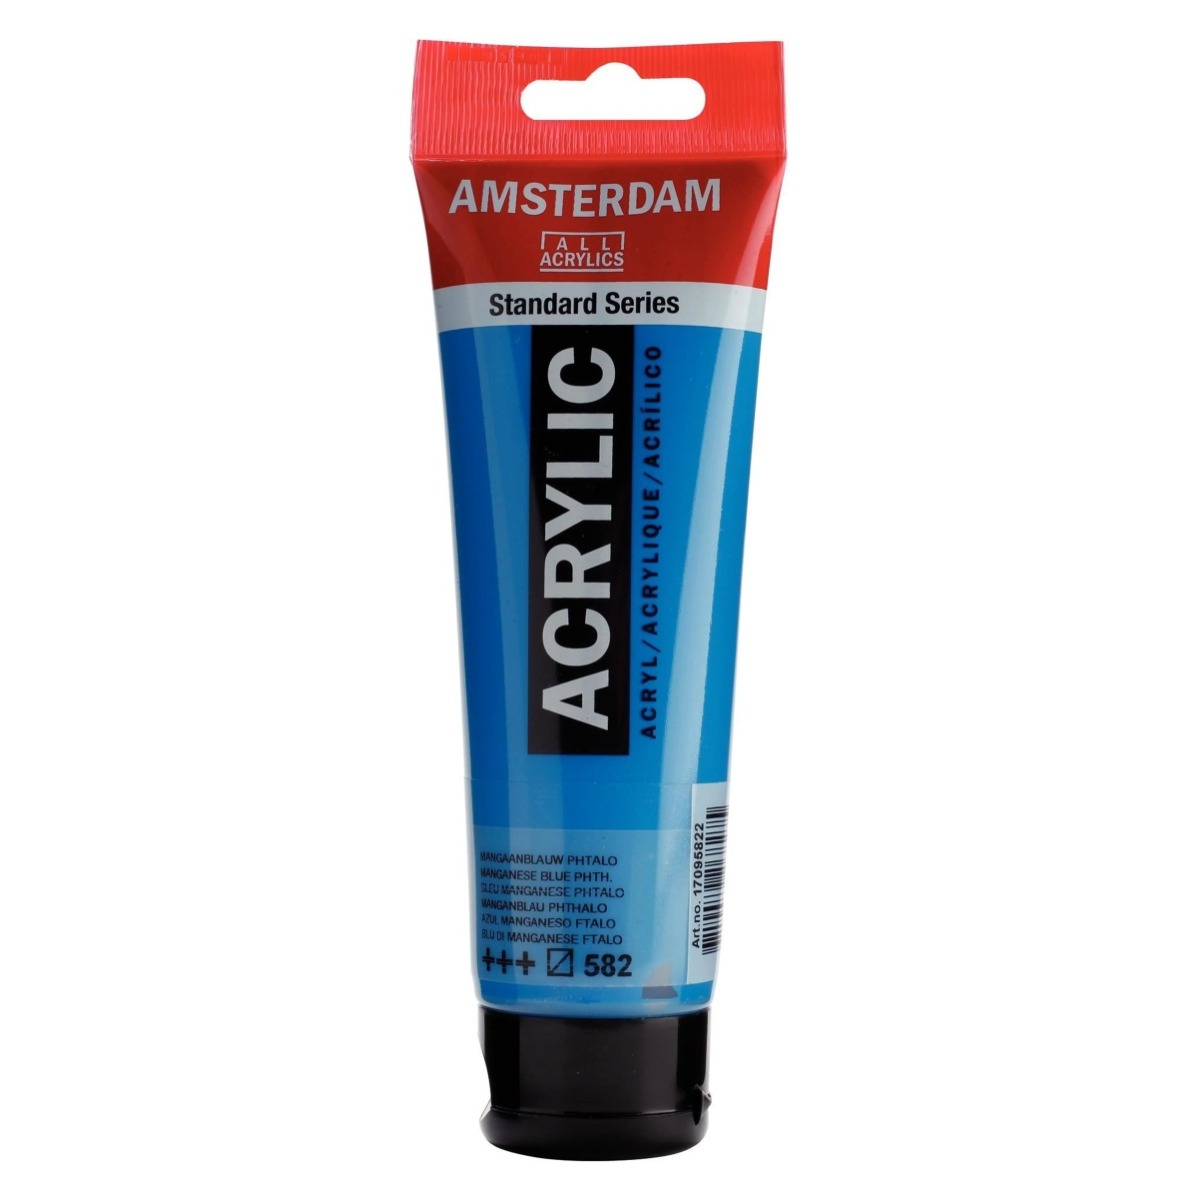 Acrilic Standard 120ml Amsterdam albastru phthalo de mangan 17095822